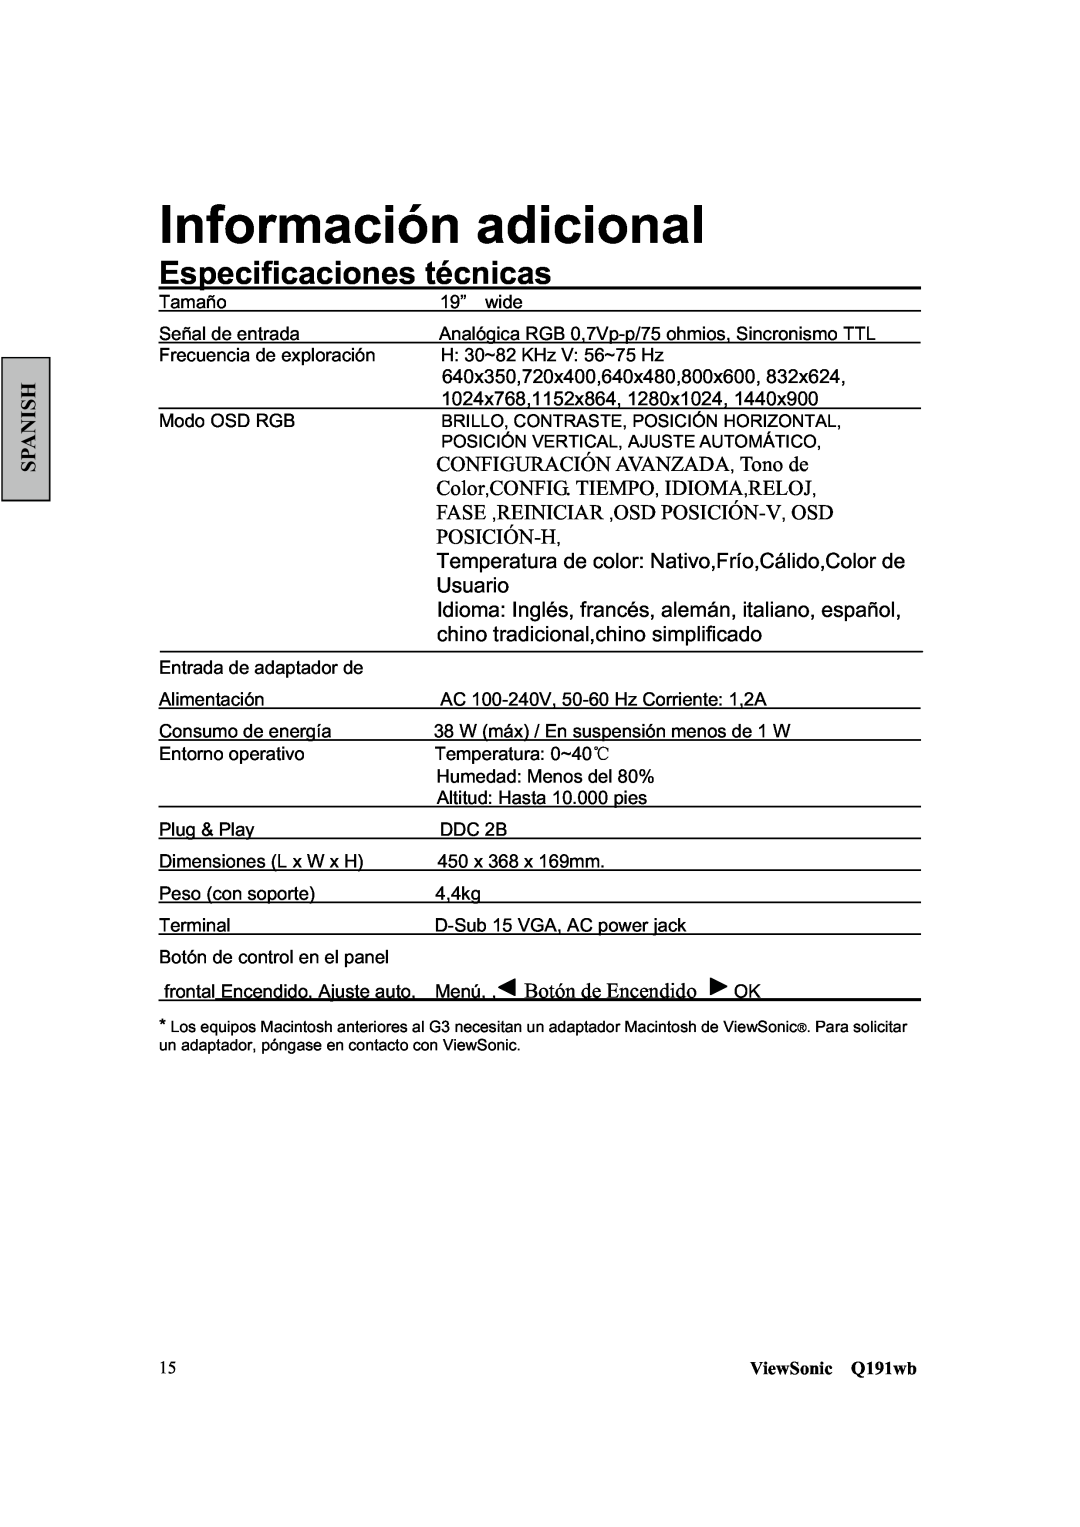 ViewSonic Q191WB manual Información adicional, Especificaciones técnicas, Spanish, ViewSonic Q191wb 